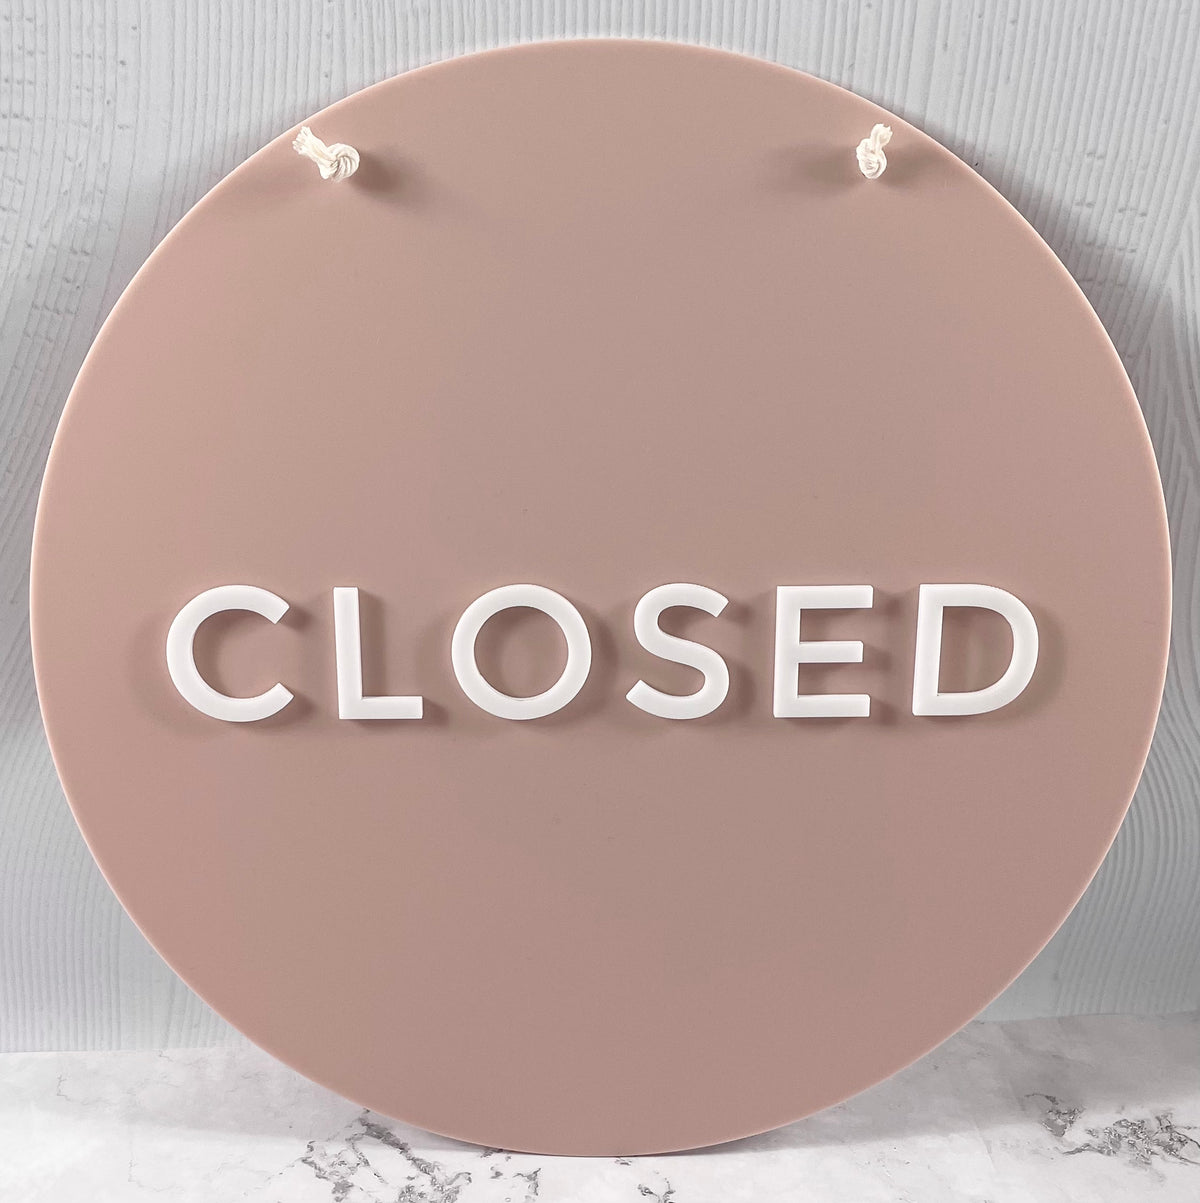 closed sign 